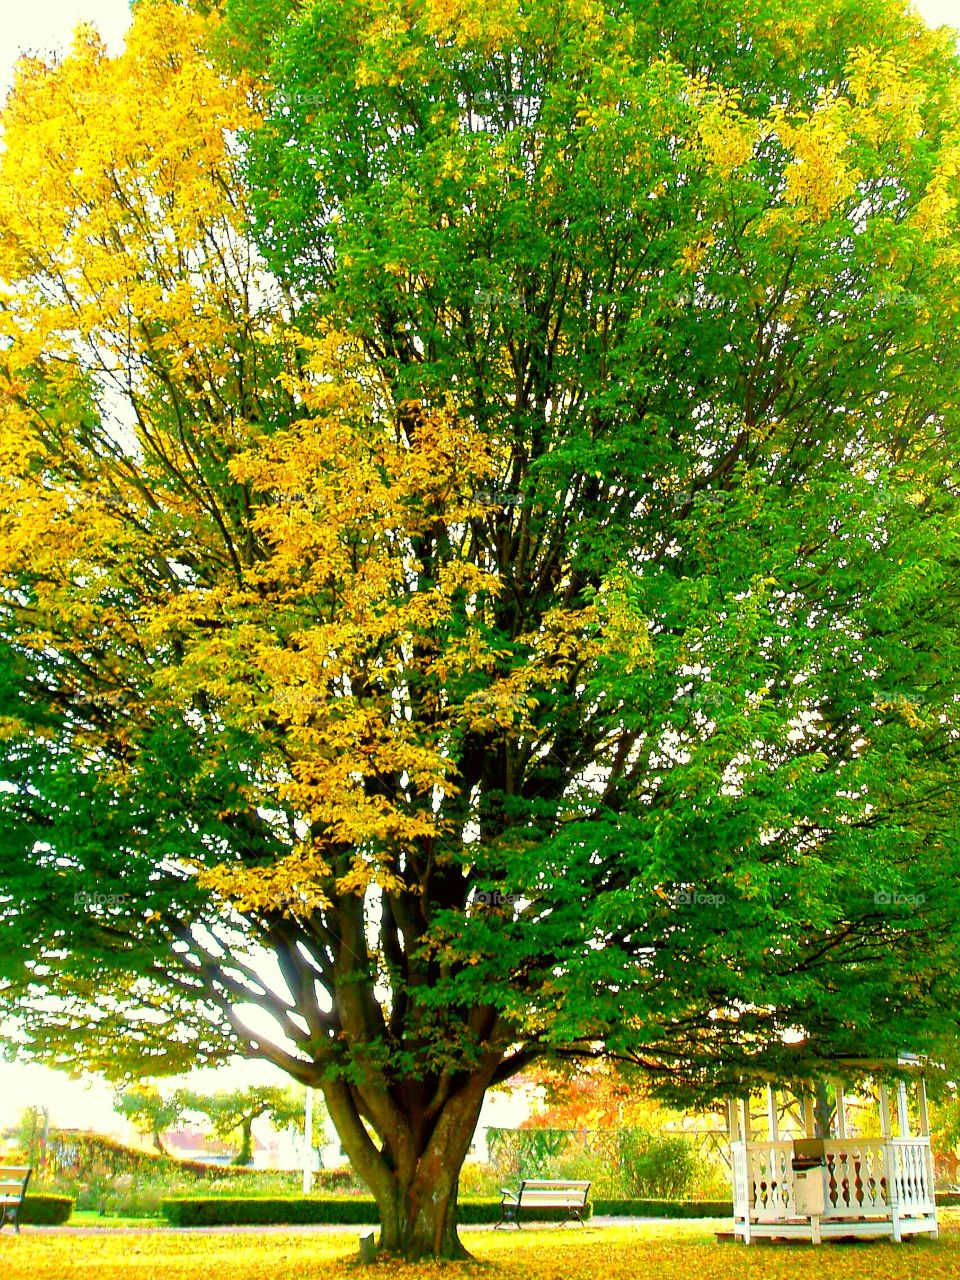 Big autumn tree